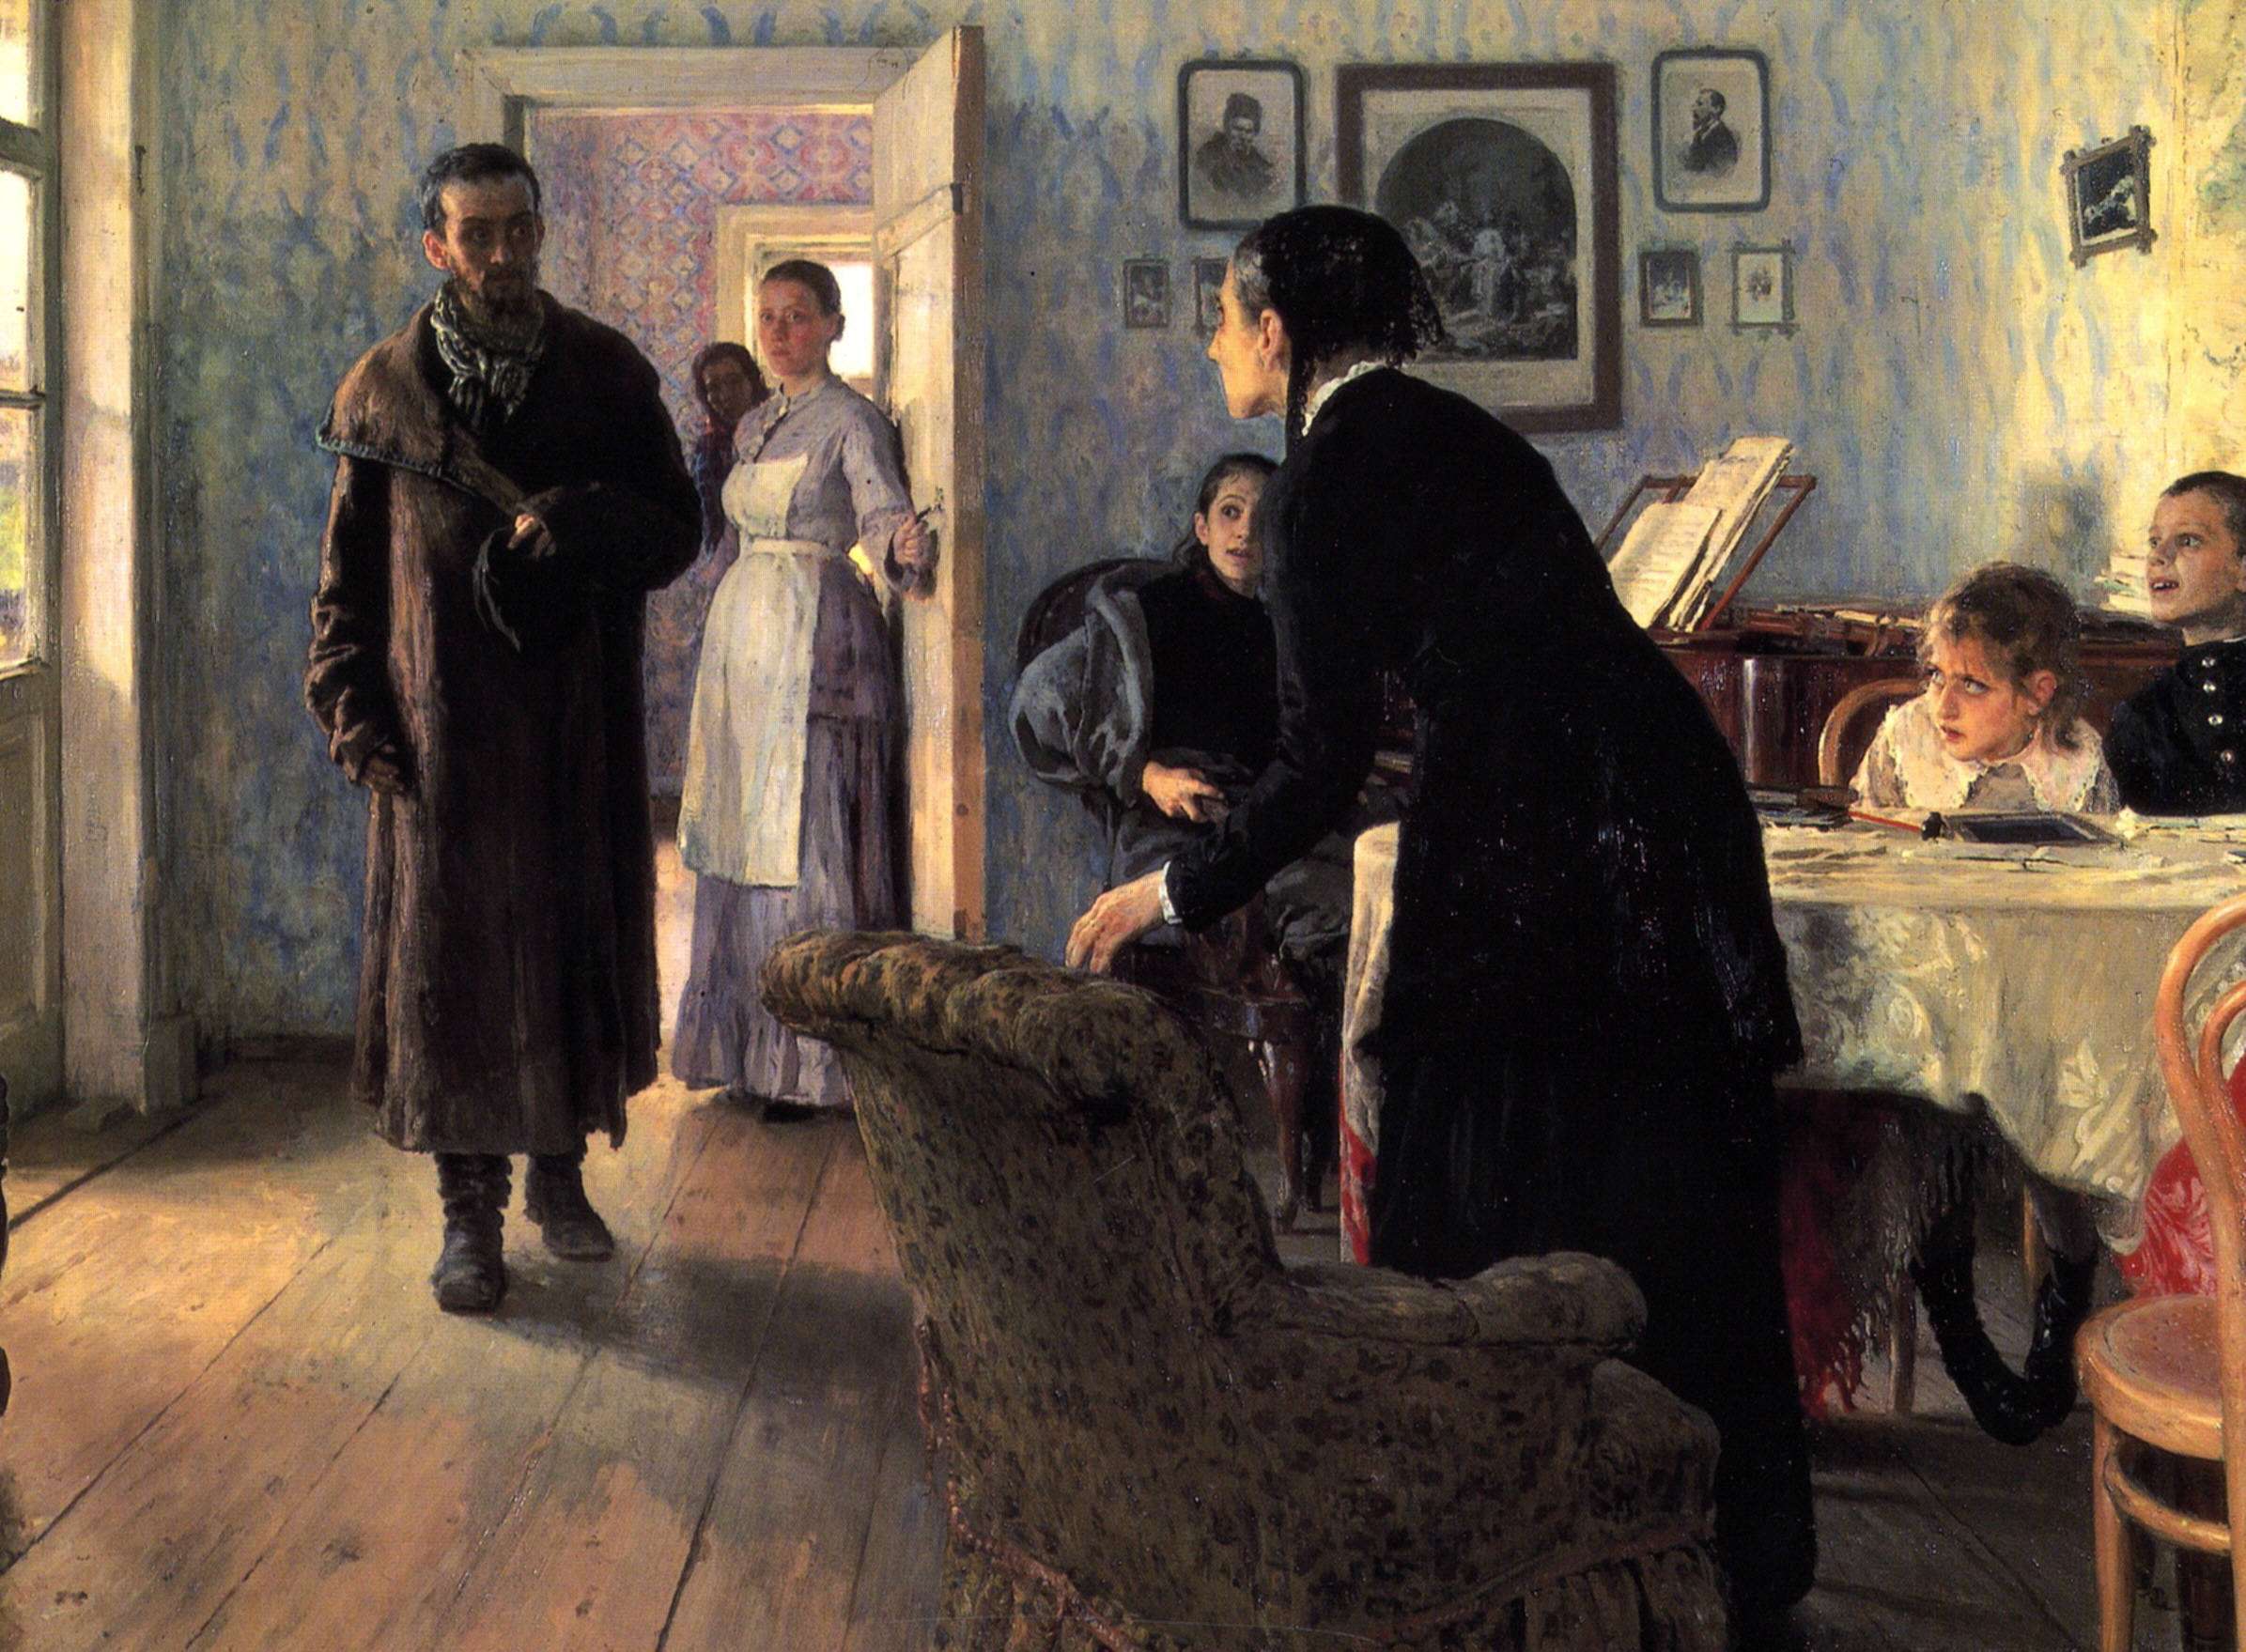 意外訪客 by Ilya Repin - 1884 - 167.5 x 160.5 cm 